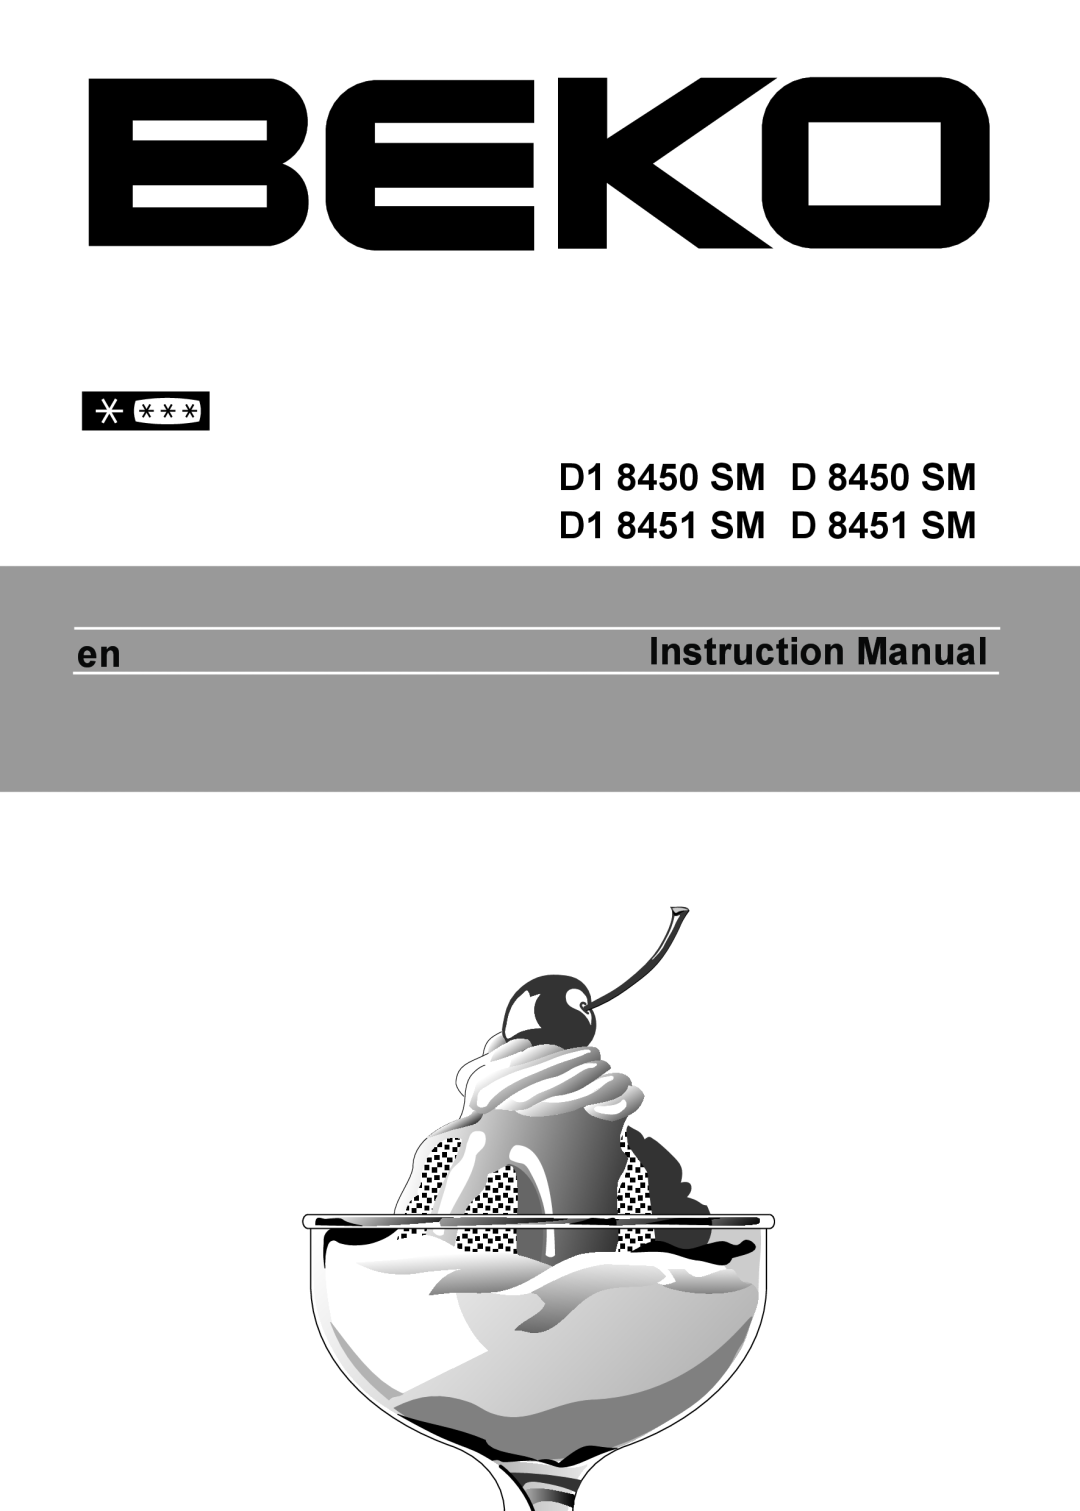 Beko instruction manual D1 8450 SM D 8450 SM D1 8451 SM D 8451 SM 